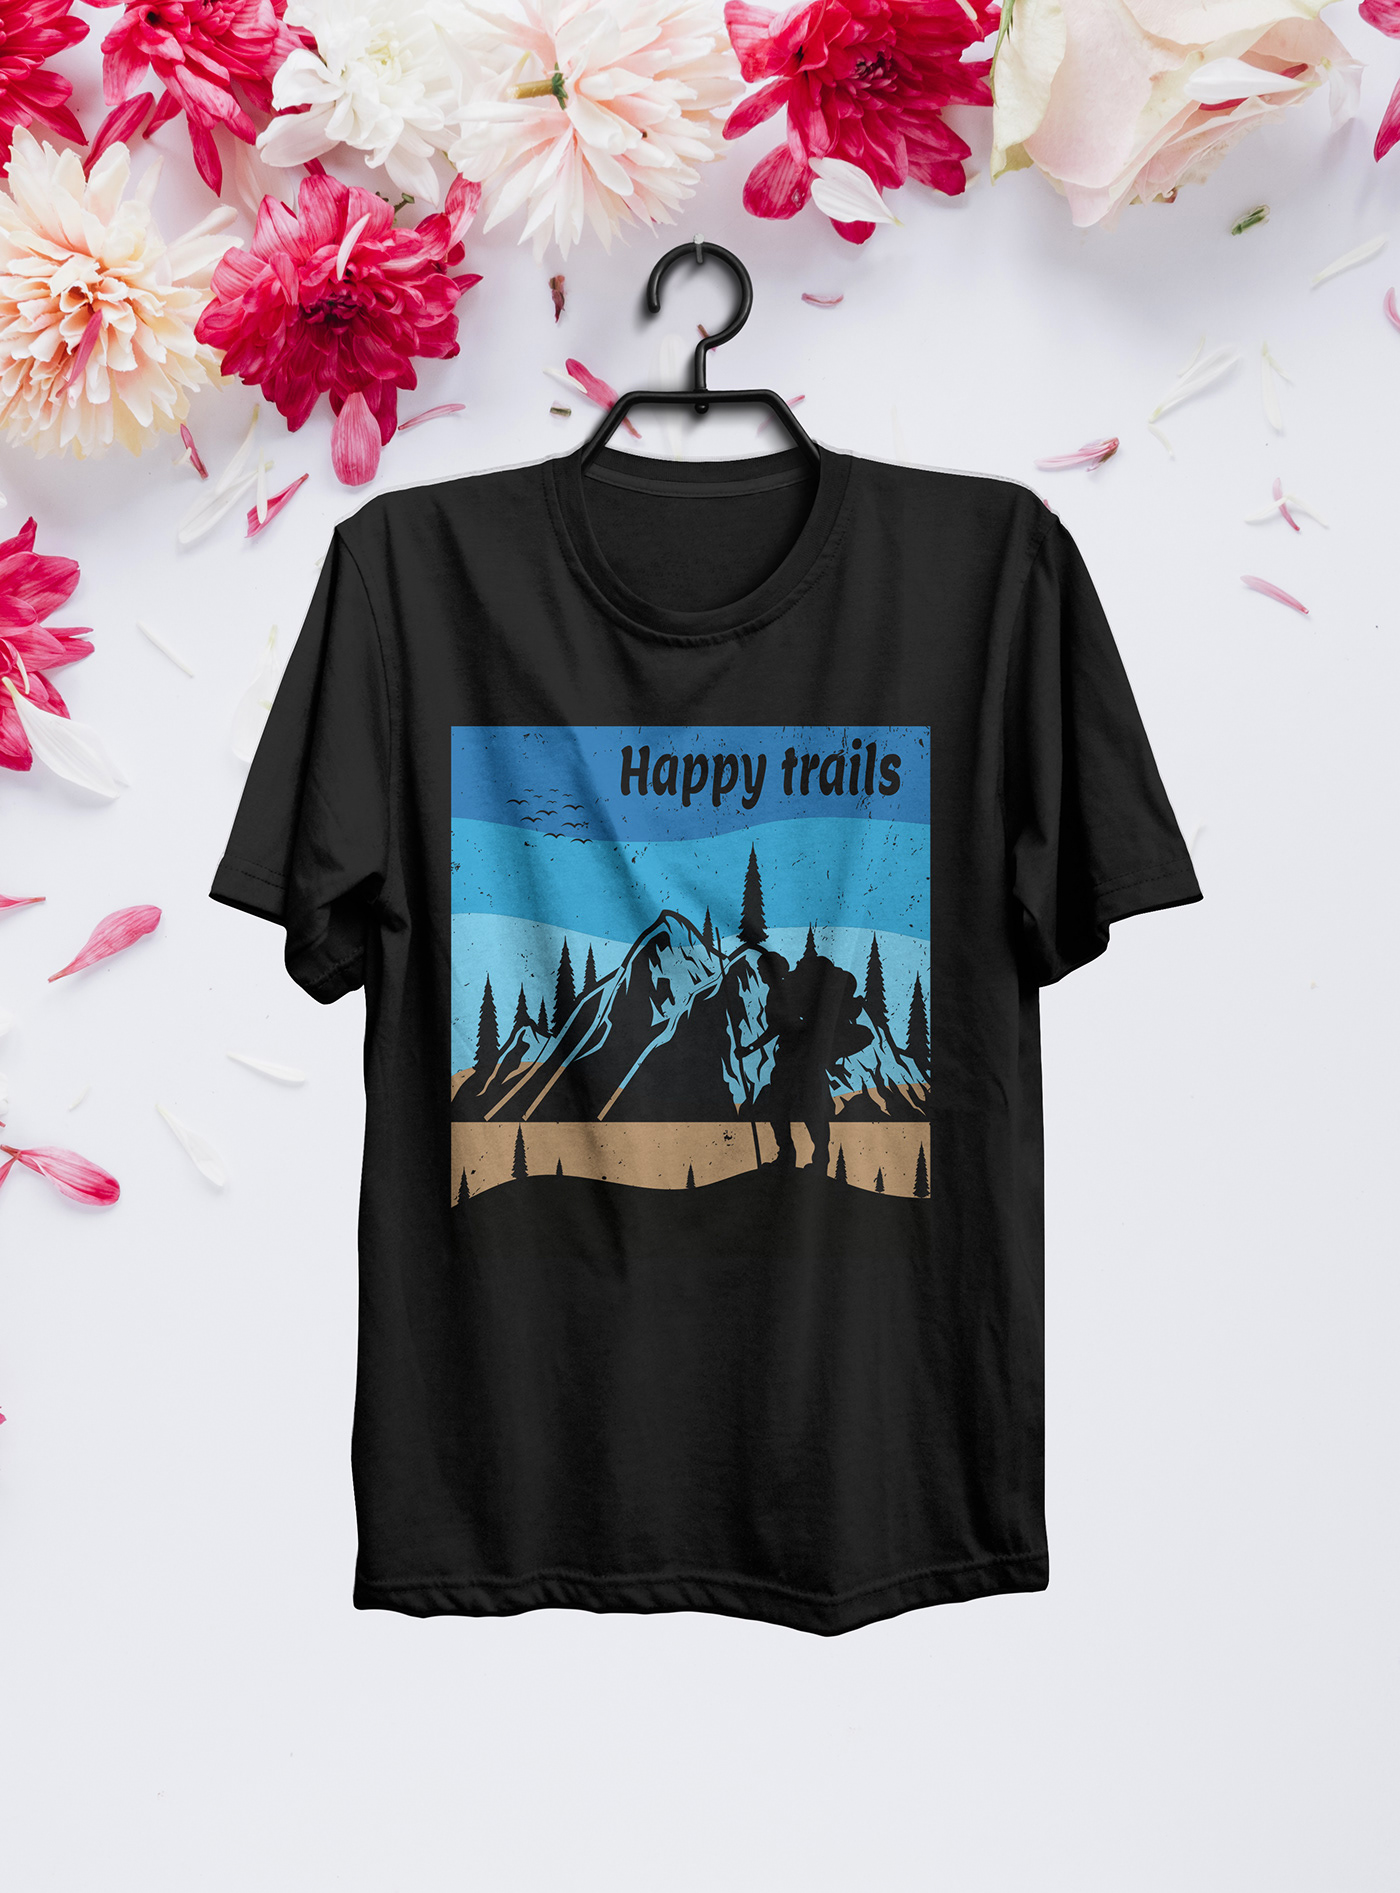 ACTIVE SHIRT t-shirt Tshirt Design Graphic Designer adventure Travel mountains hiking outdoors Nature